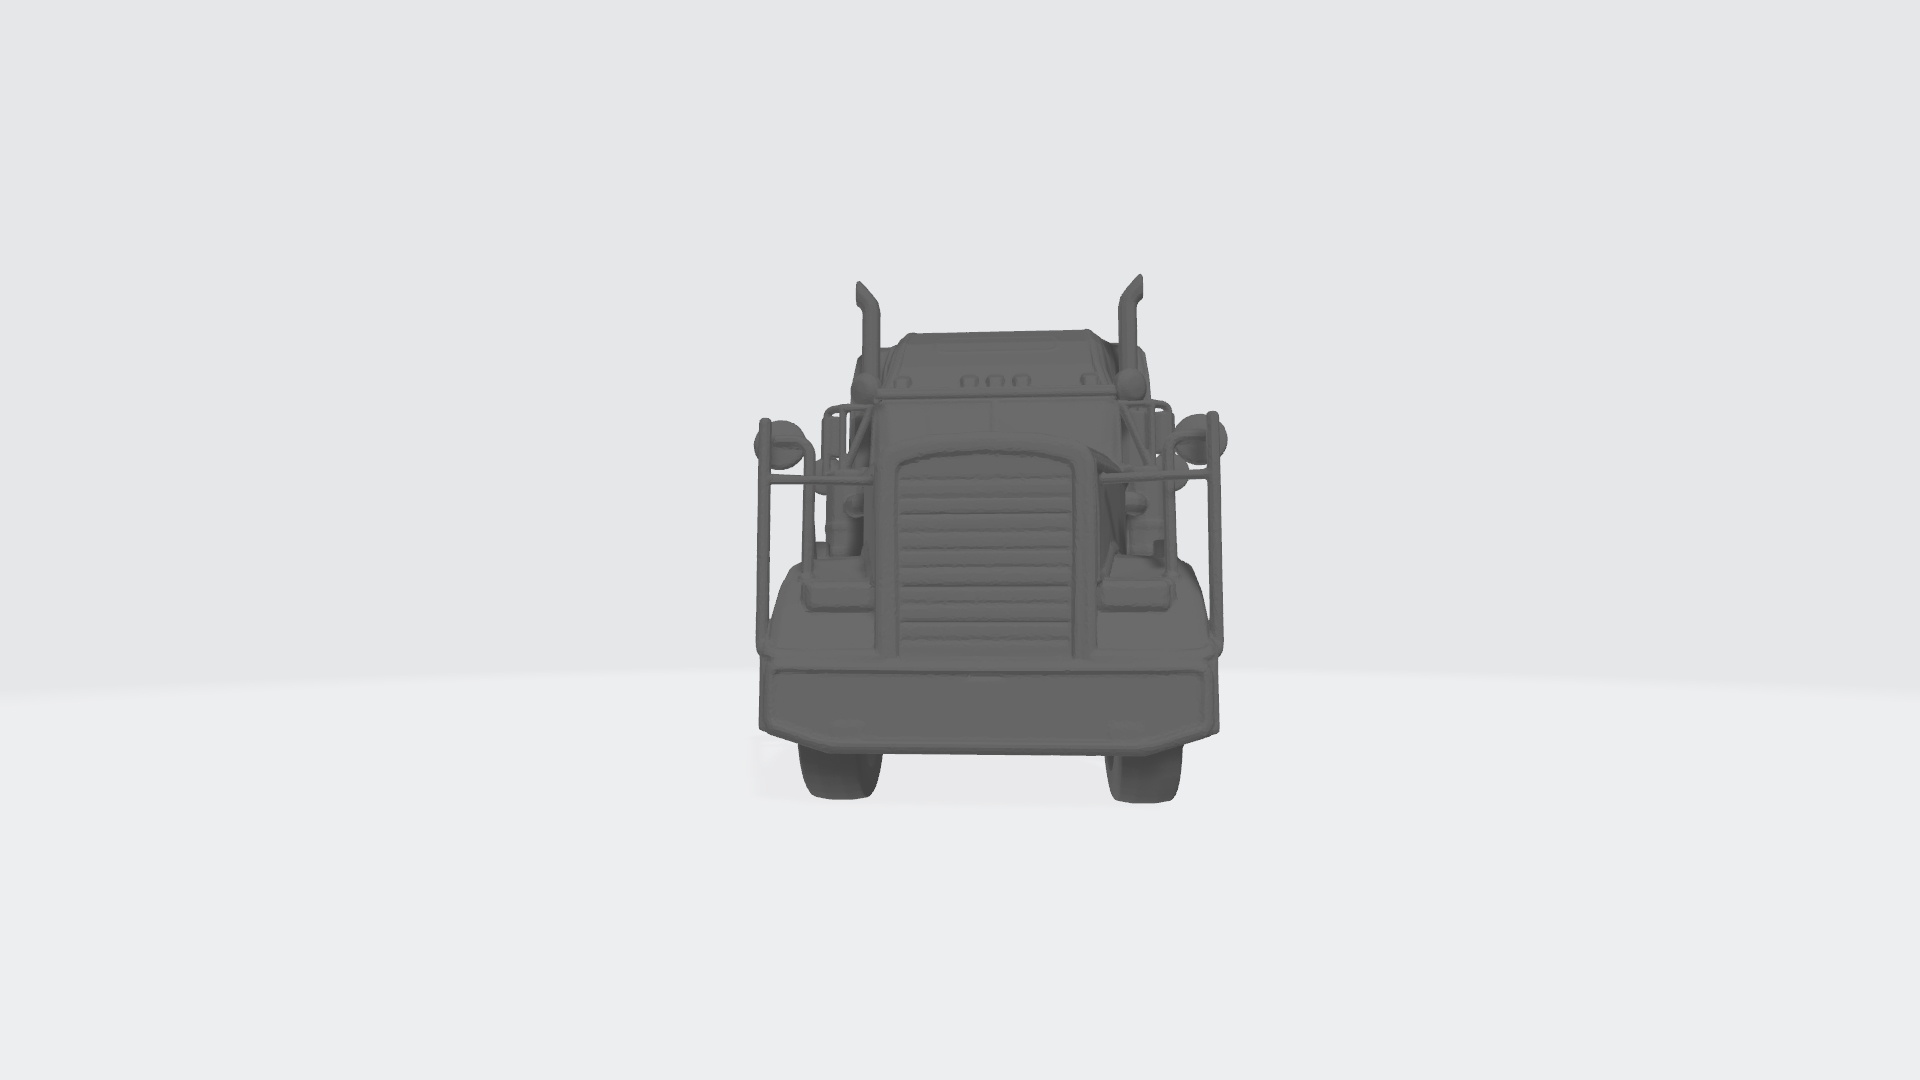 https://assets.pinshape.com/uploads/image/file/256739/3d-hauler-american-truck-model-ready-for-3d-printing-stl-file-3d-printing-256739.jpg